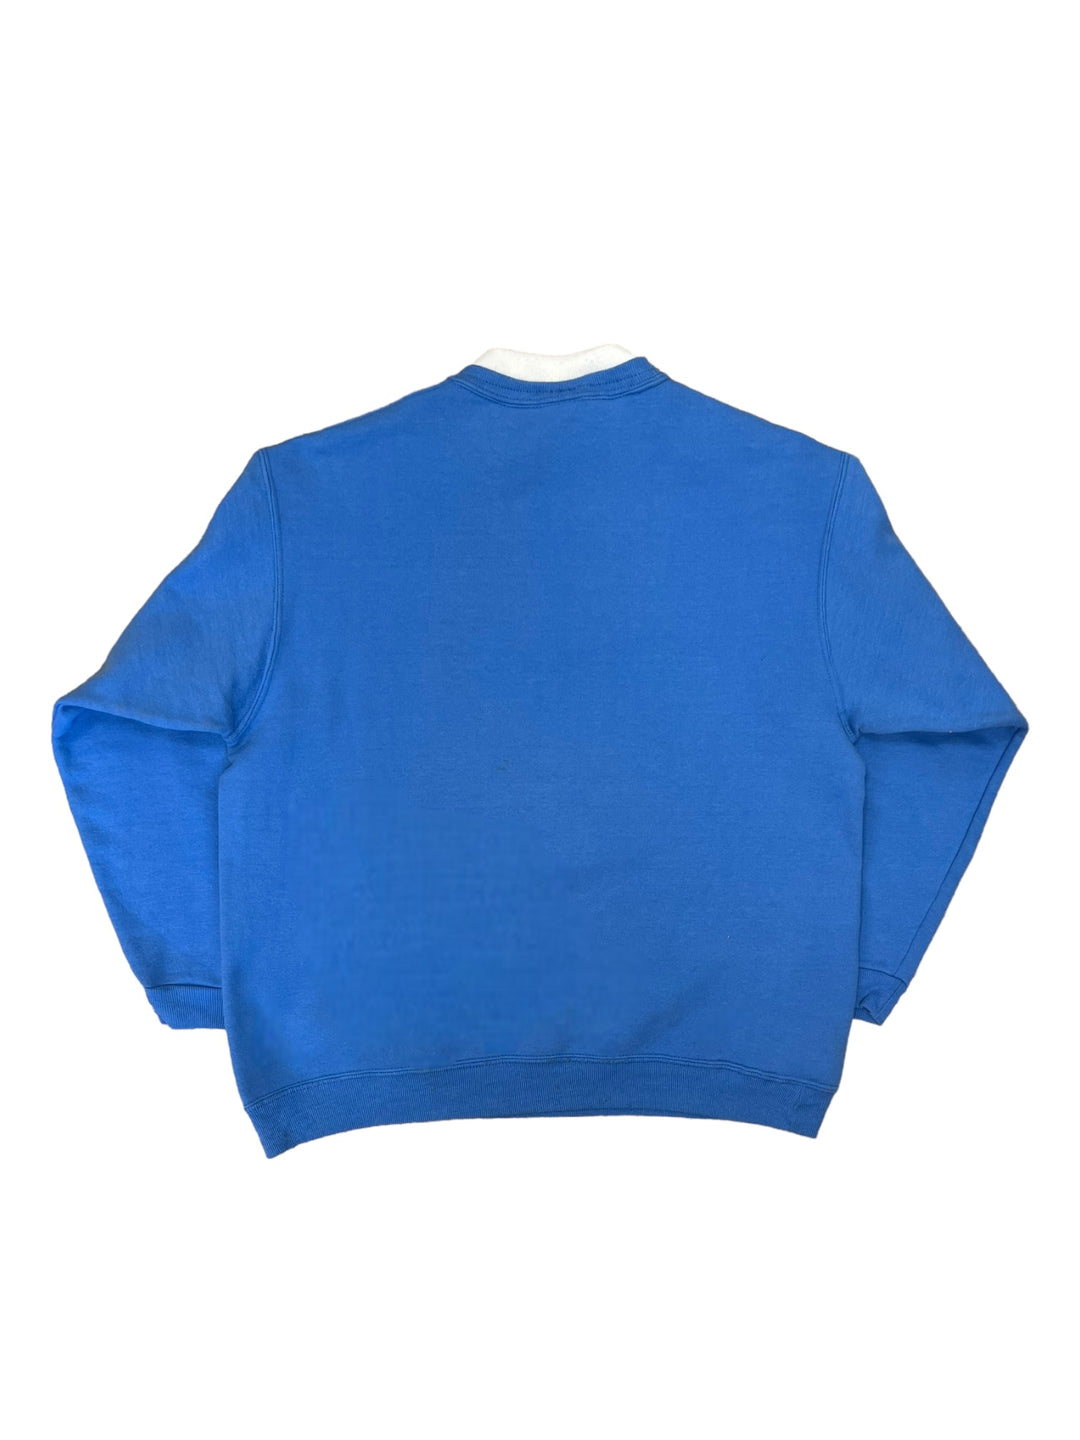 Vintage embroidered sweatshirt men’s Medium